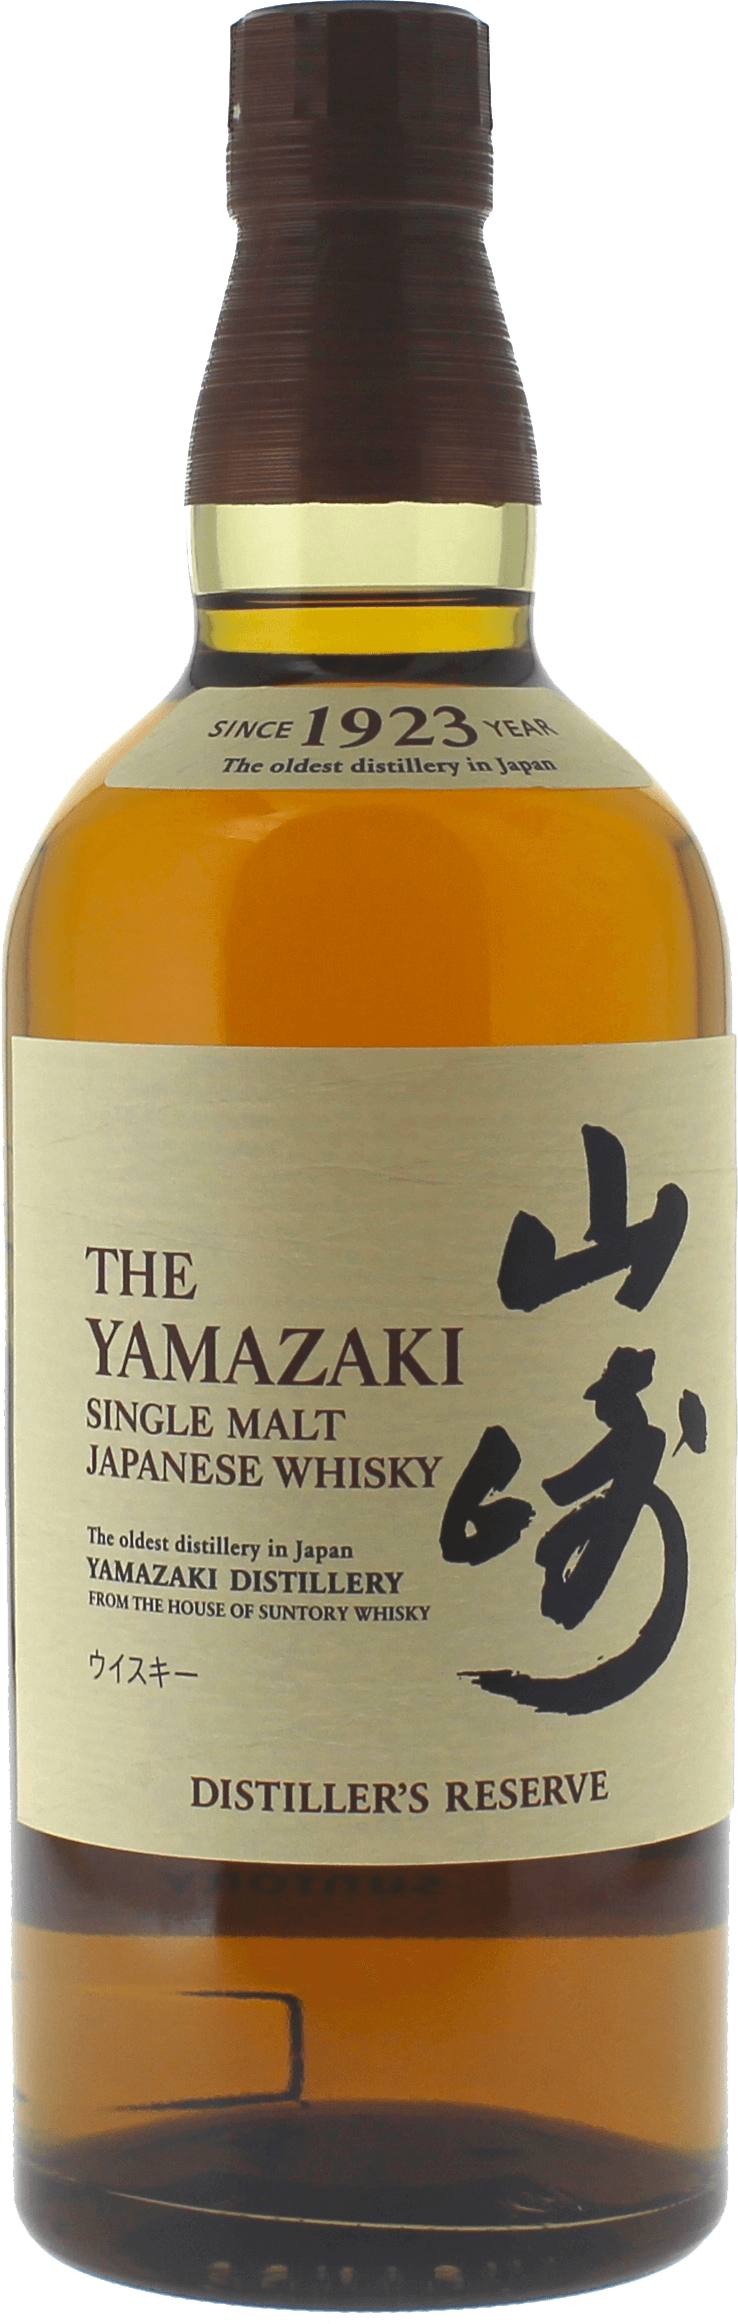 Whisky japonais yamazaki distiller reserve 43  Whisky